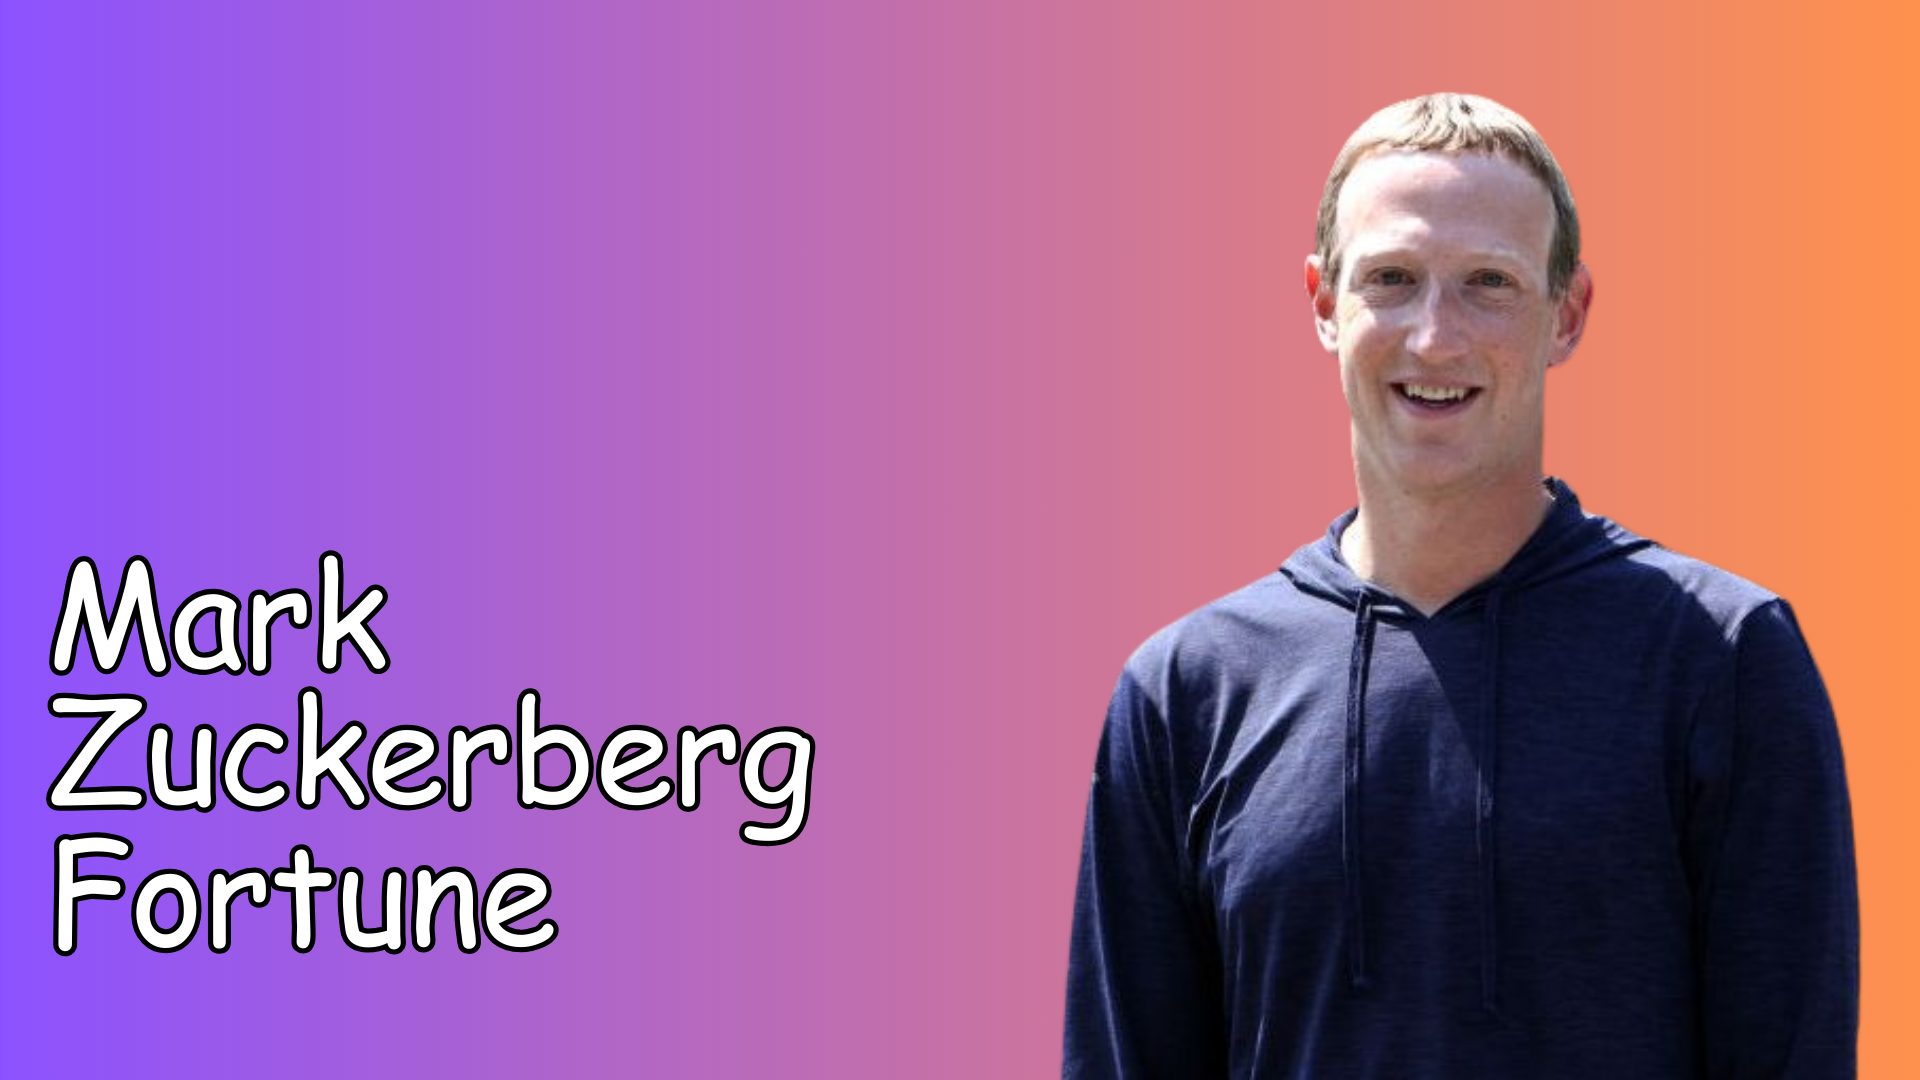 Mark Zuckerberg Fortune